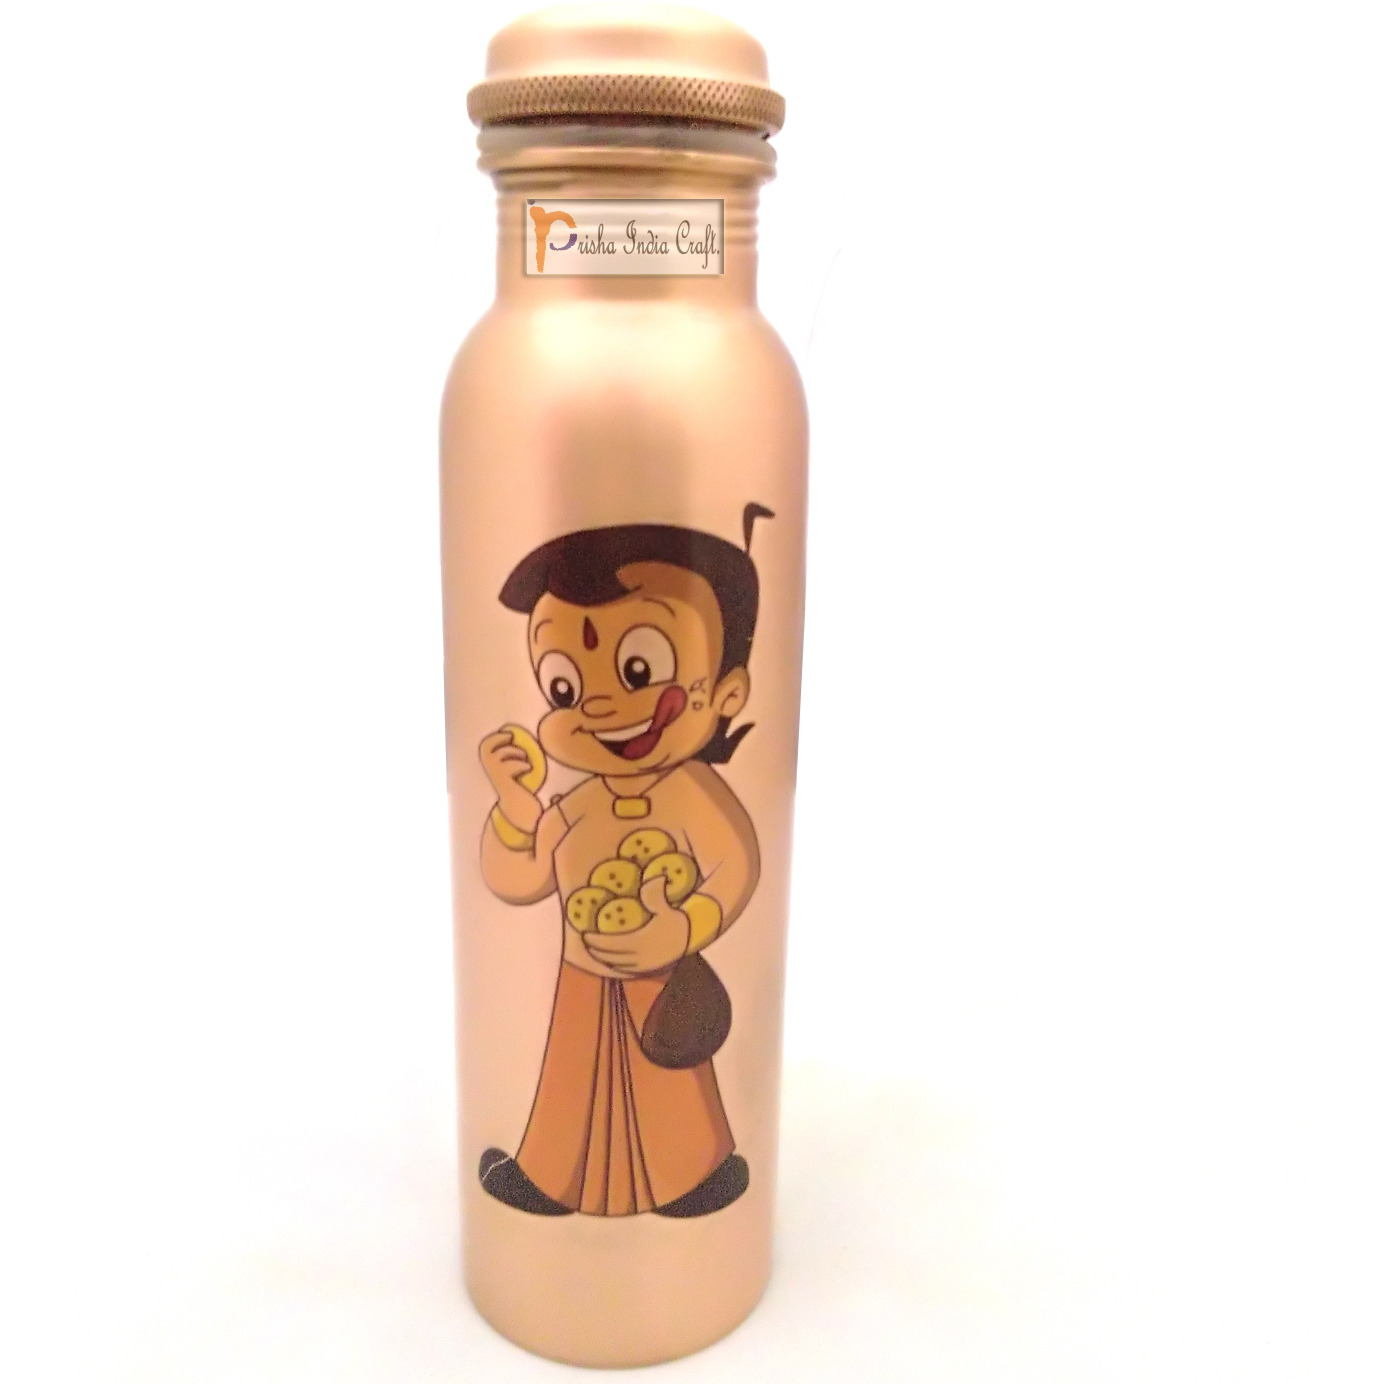 Prisha India Craft Digital Printed Pure Copper Water Bottle Kids School Water Bottle - Chhota Bheem Design, 1000 ML